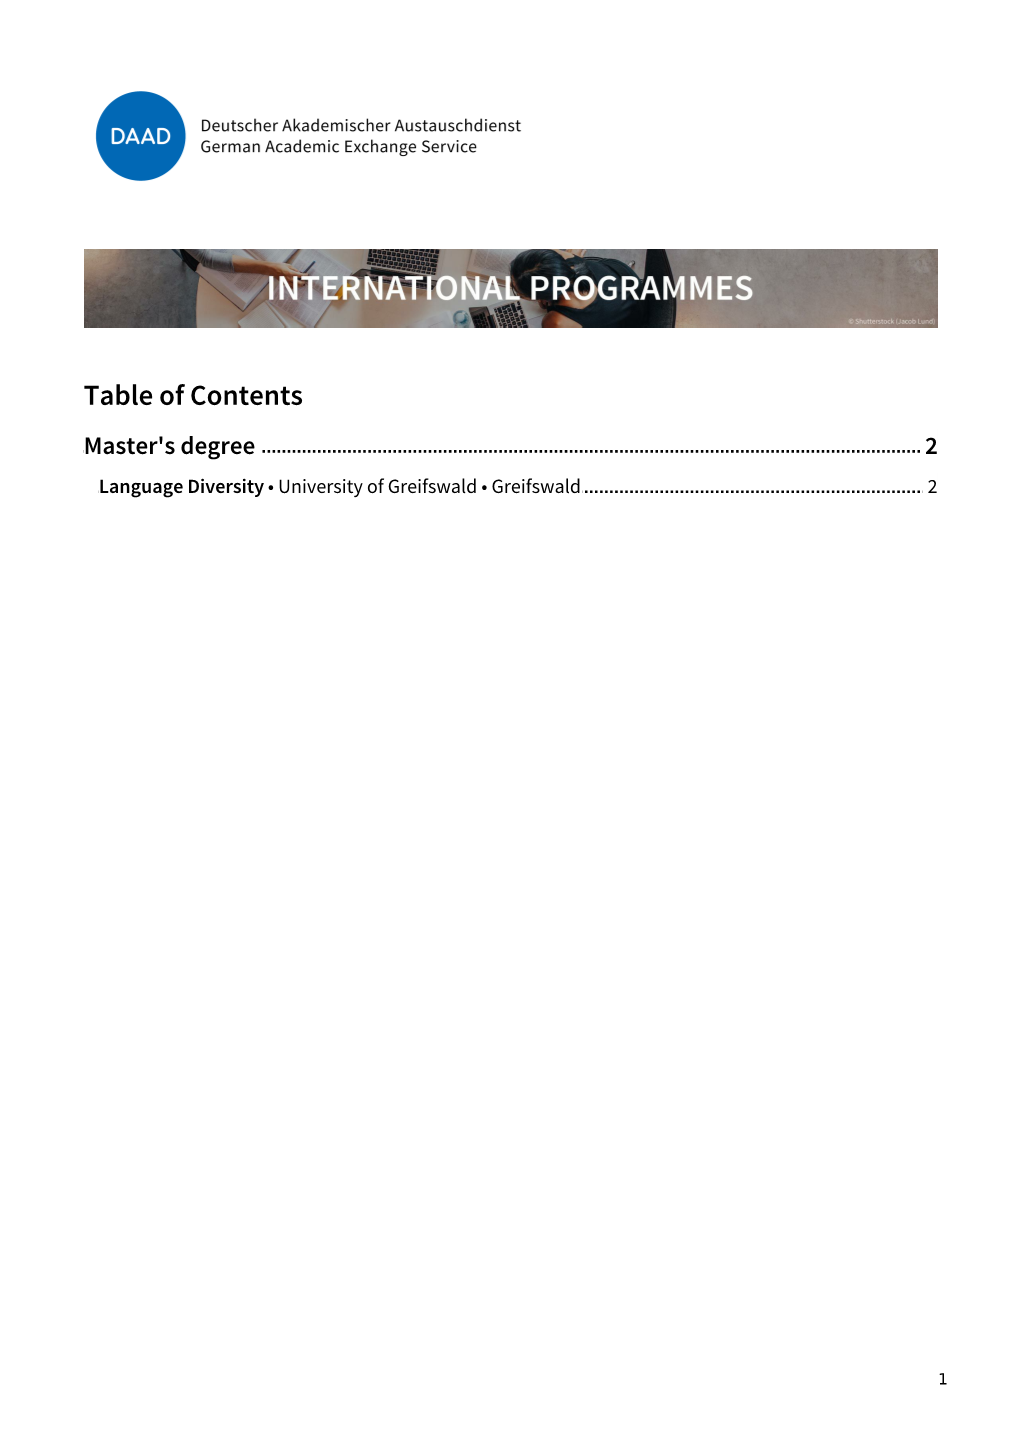 Table of Contents Master's Degree 2 Language Diversity • University of Greifswald • Greifswald 2